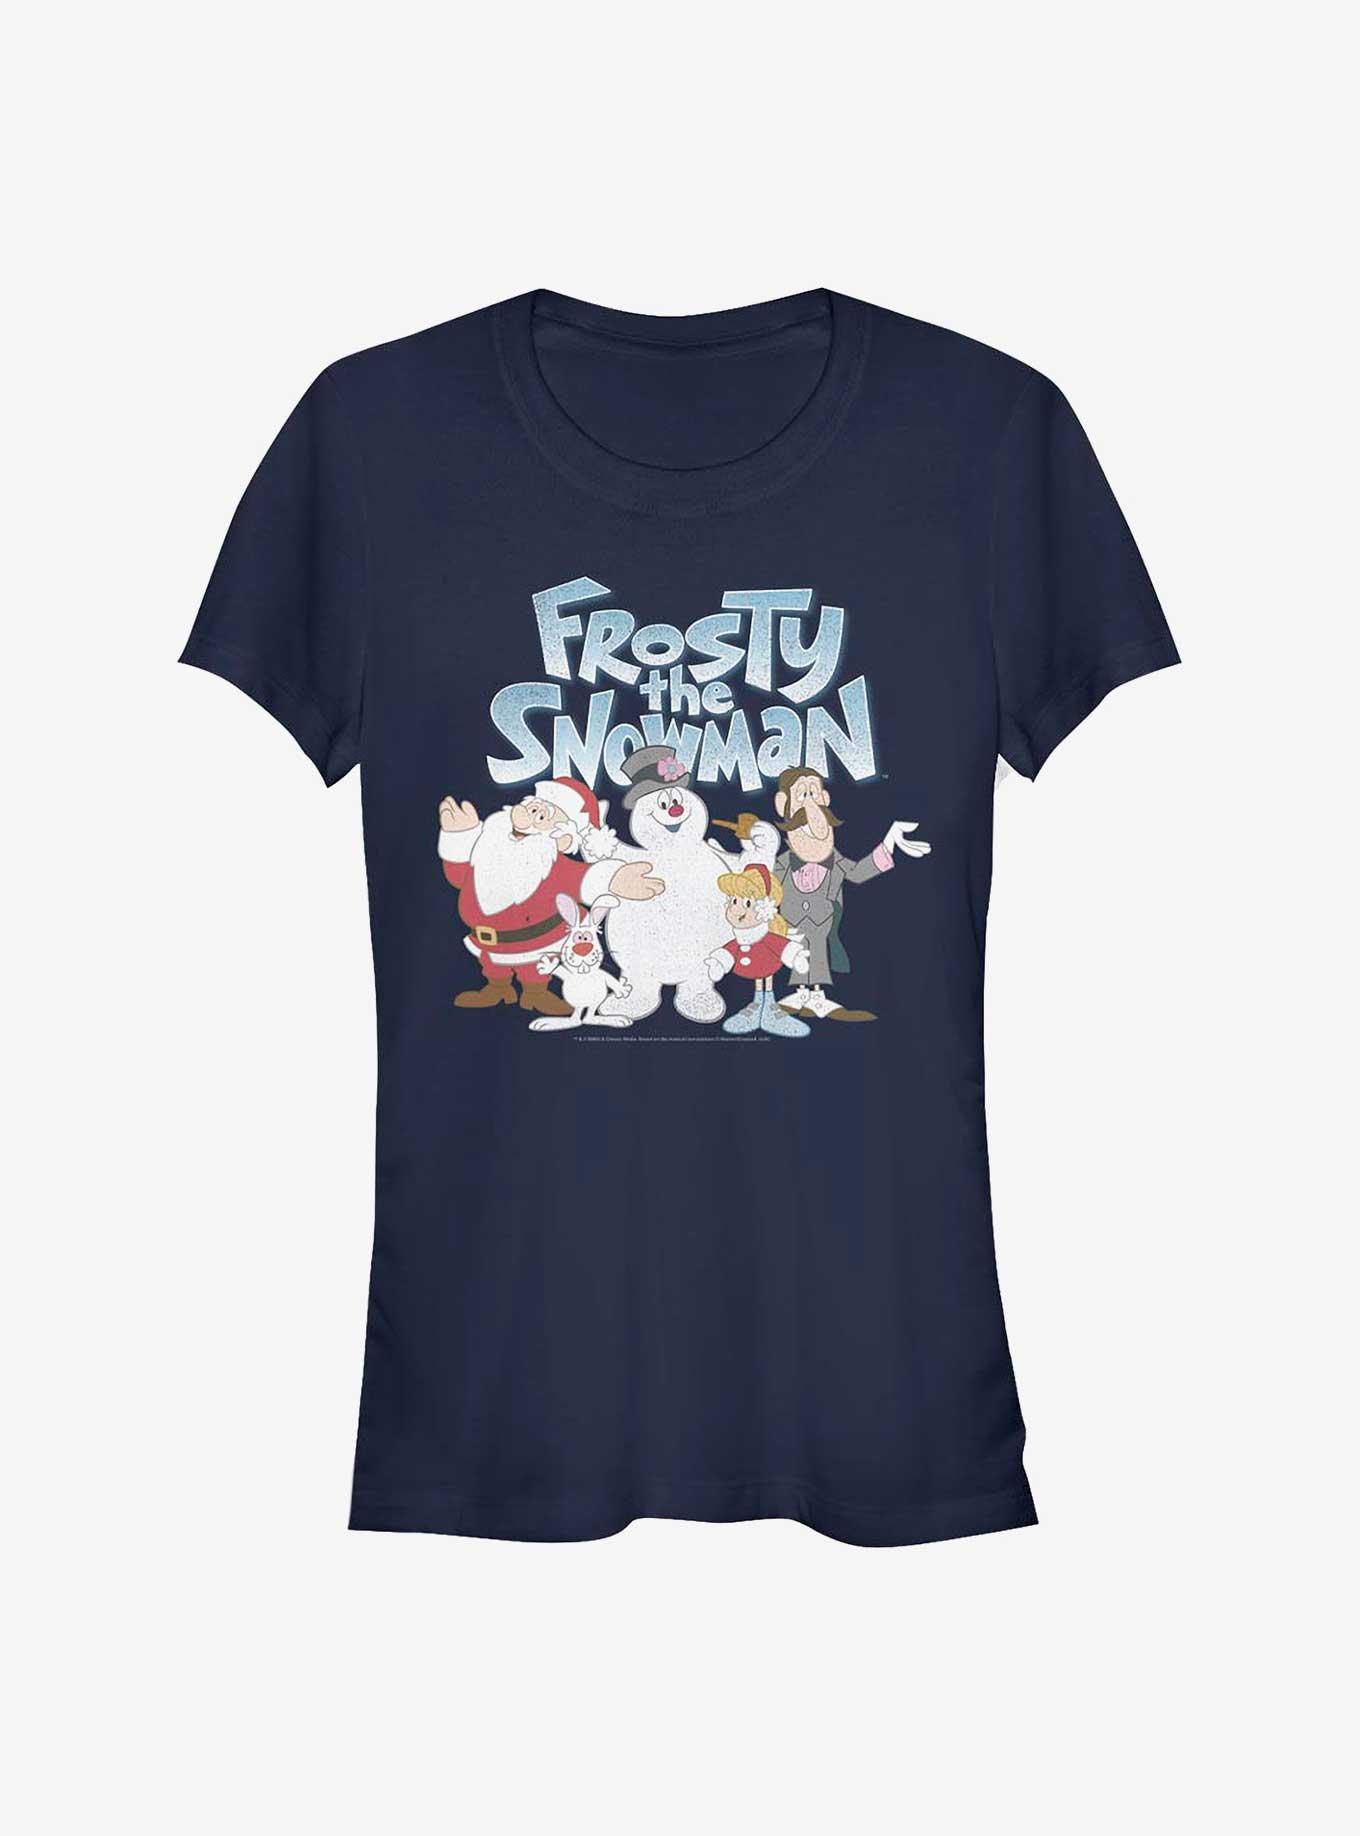 Frosty The Snowman Group Shot Girls T-Shirt, NAVY, hi-res